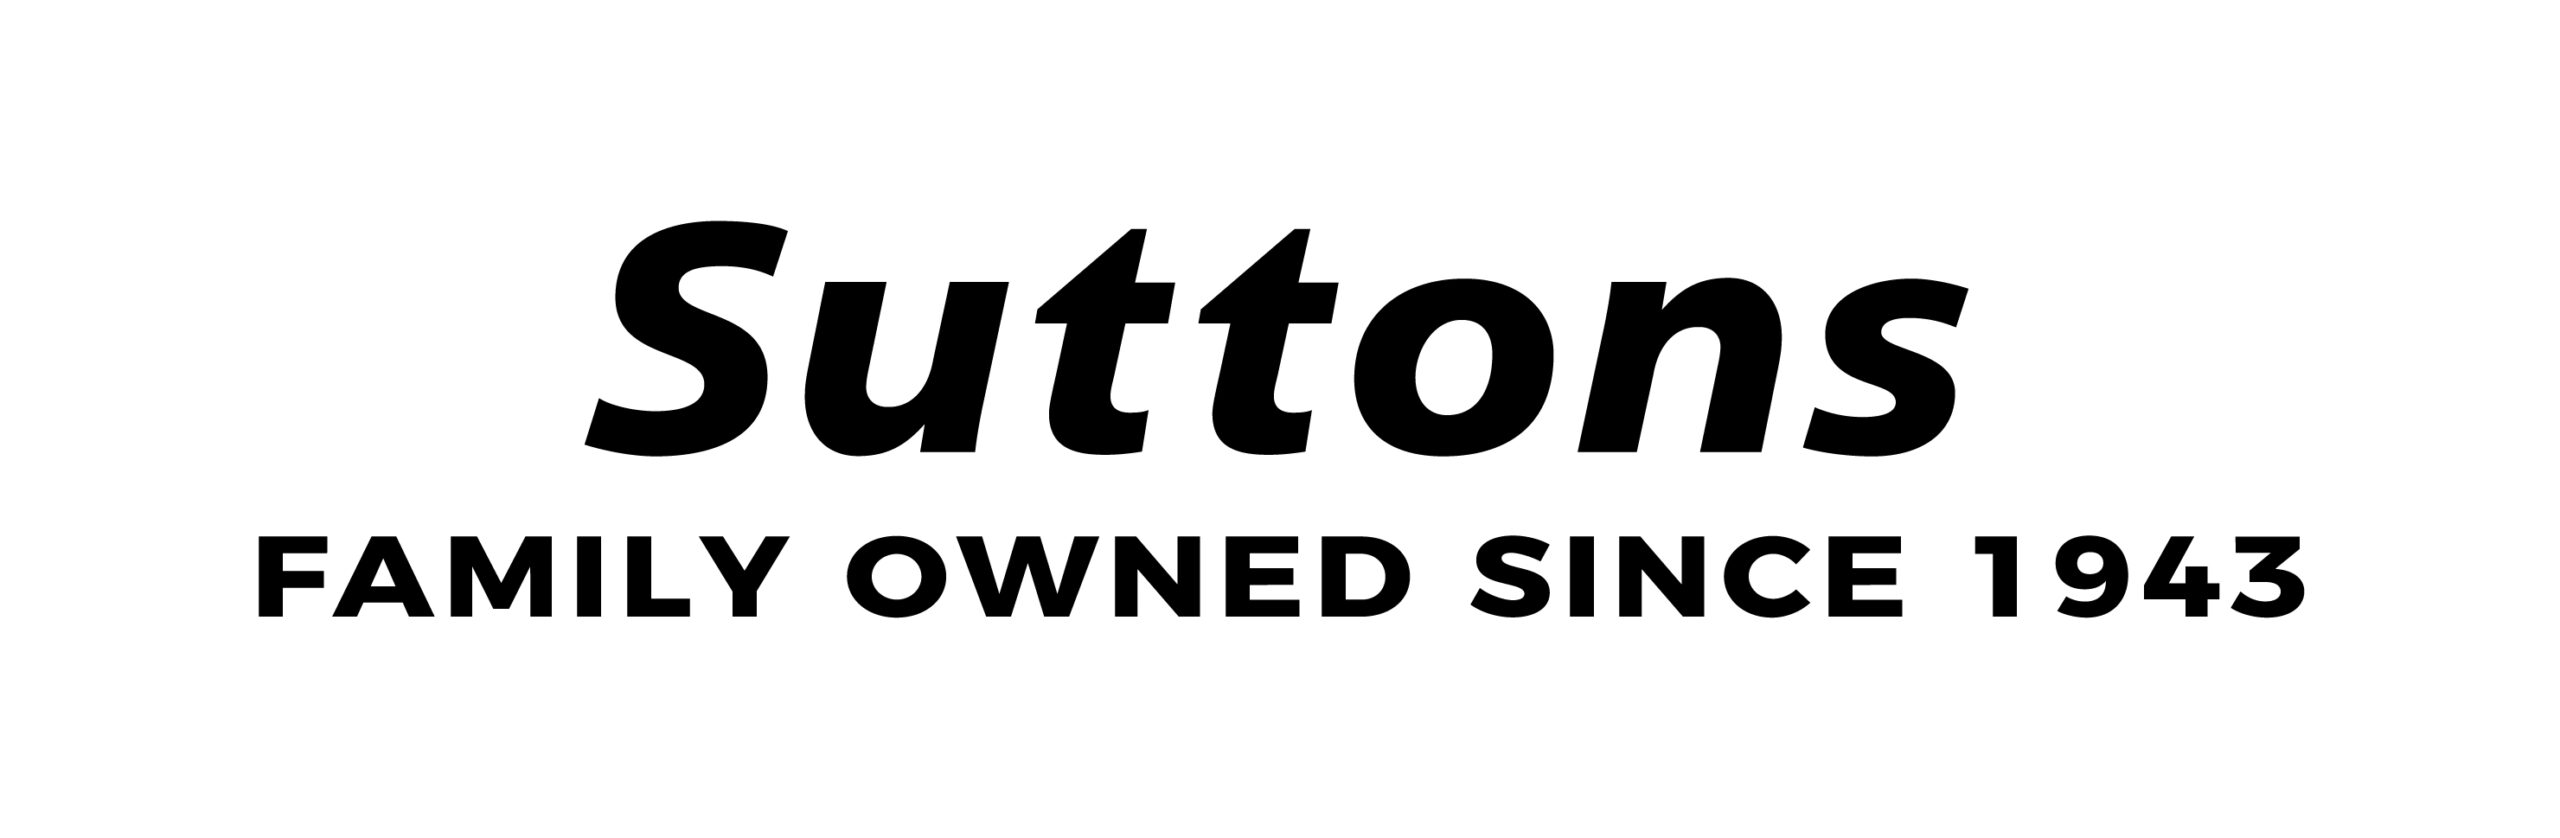 Suttons-tagline-center